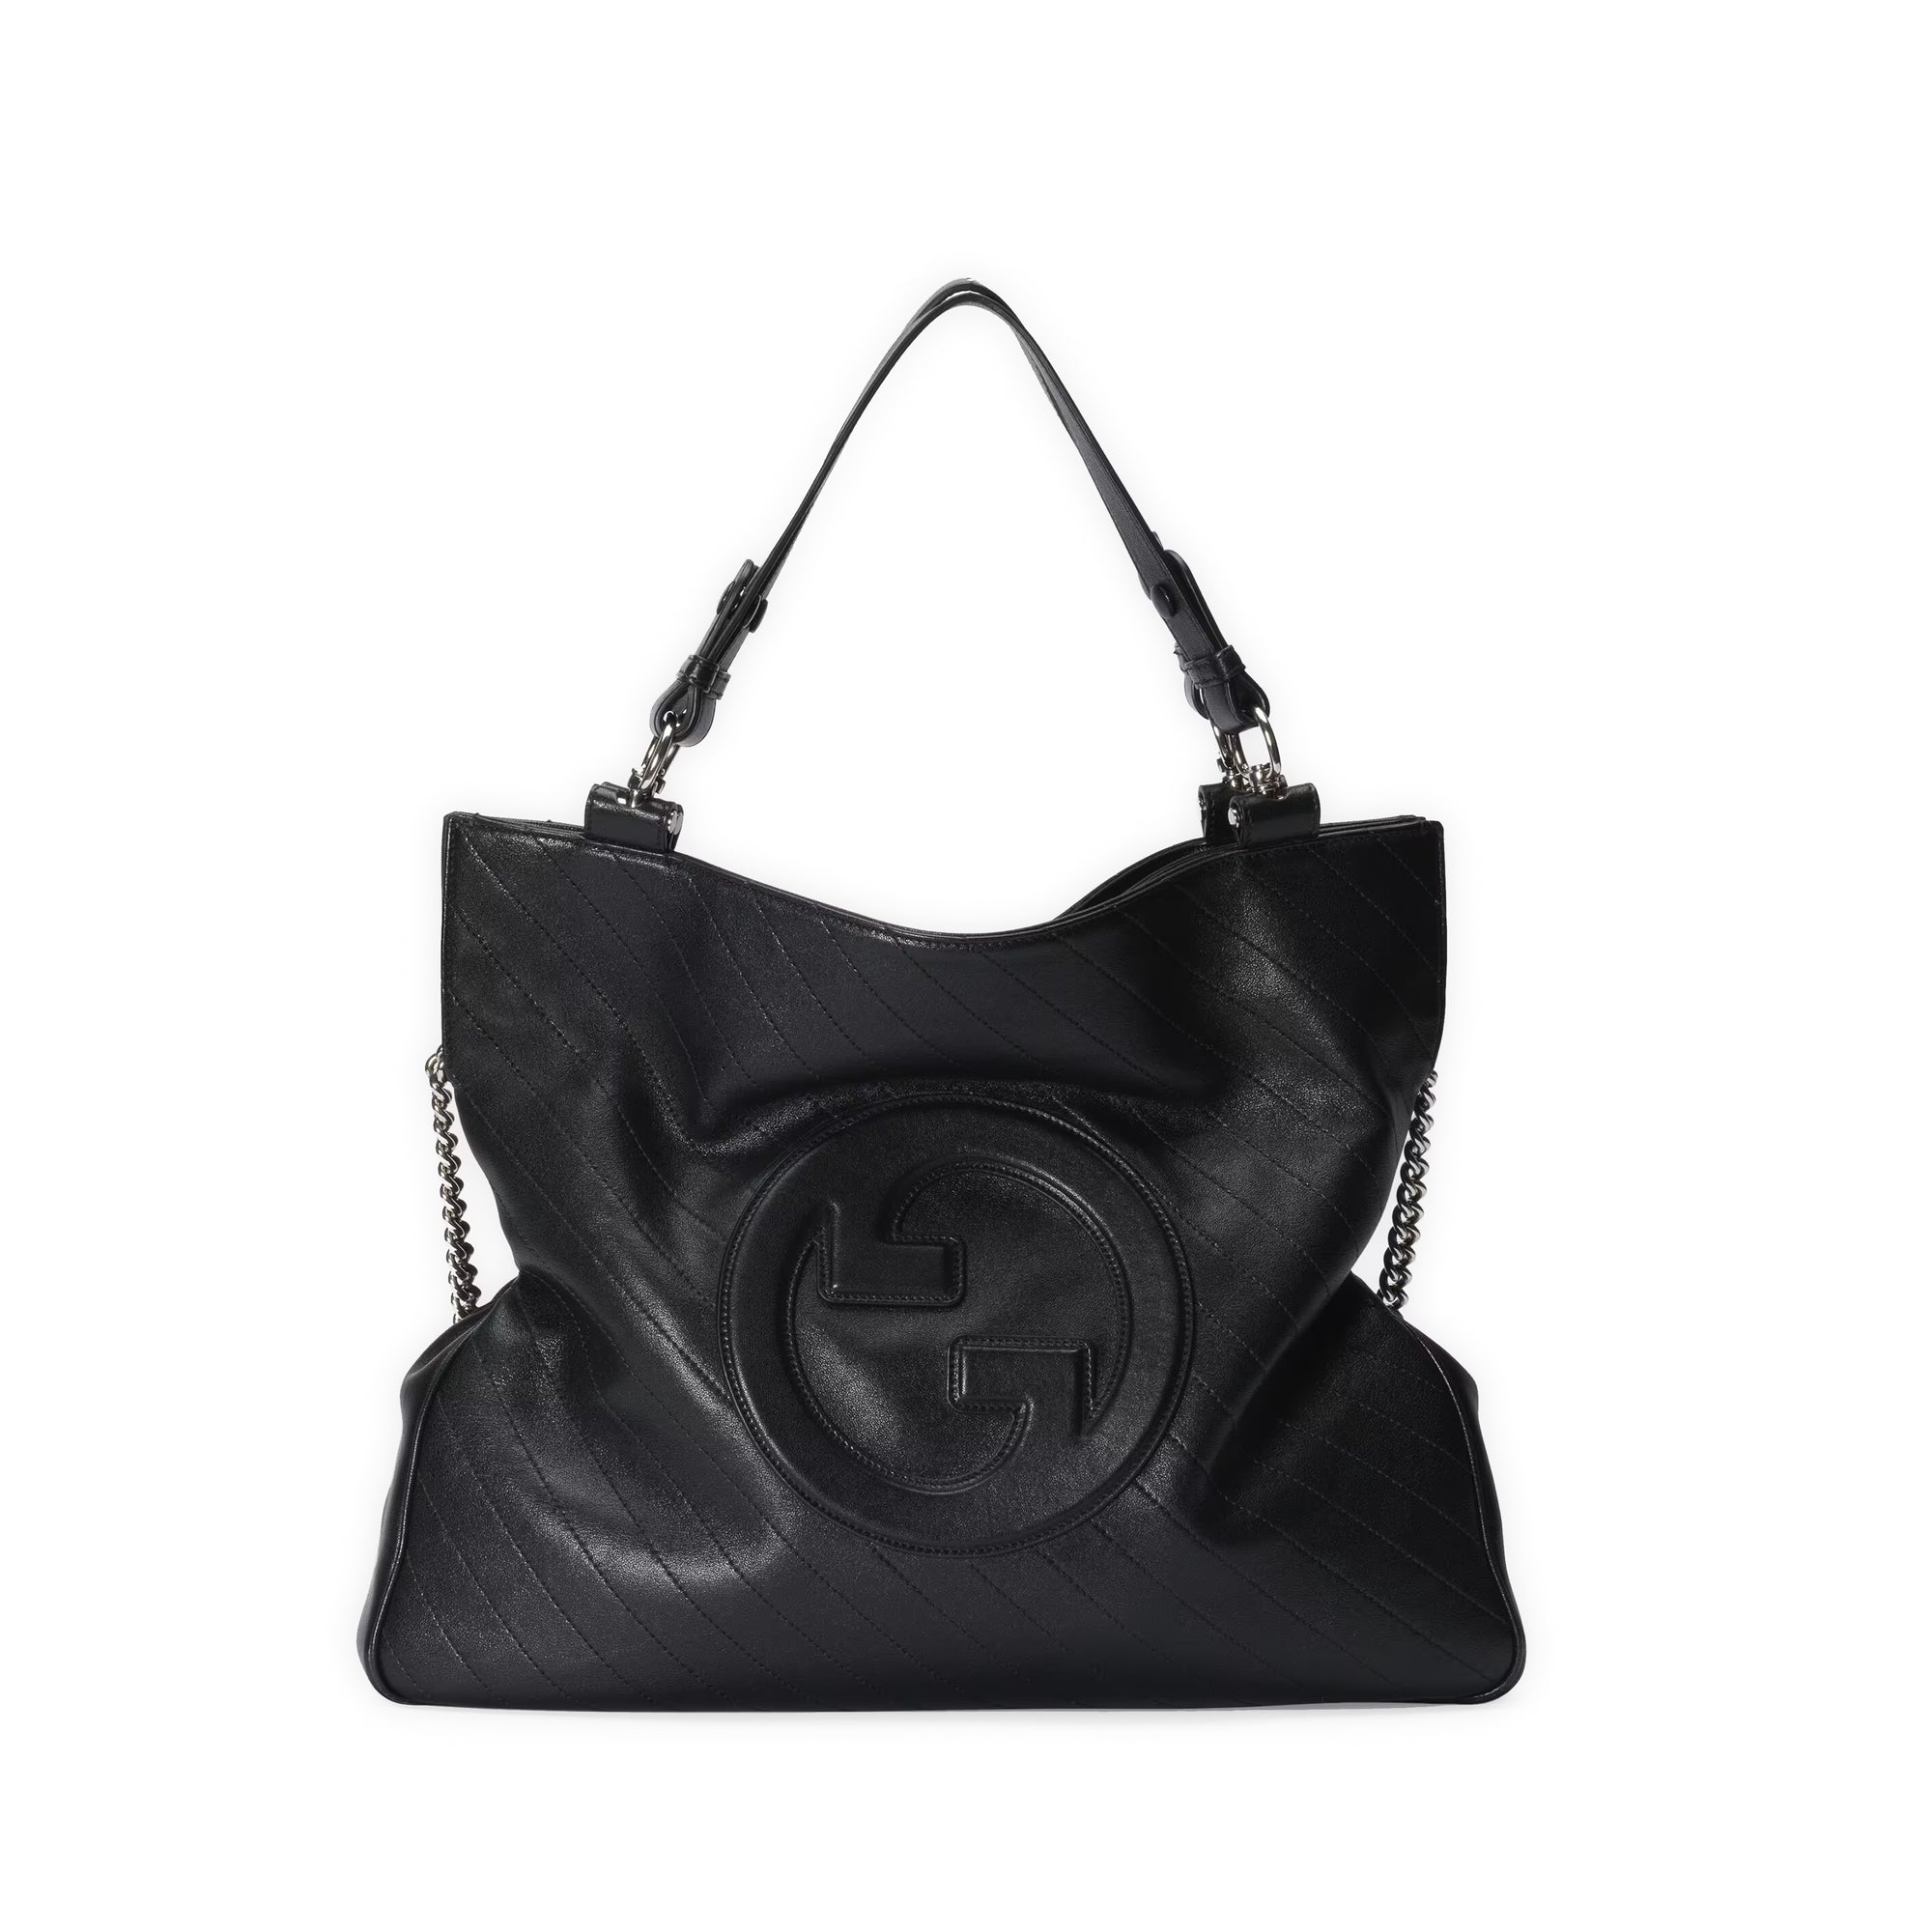 Gucci - Women’s Blondie Medium Tote Bag - (Black) view 1